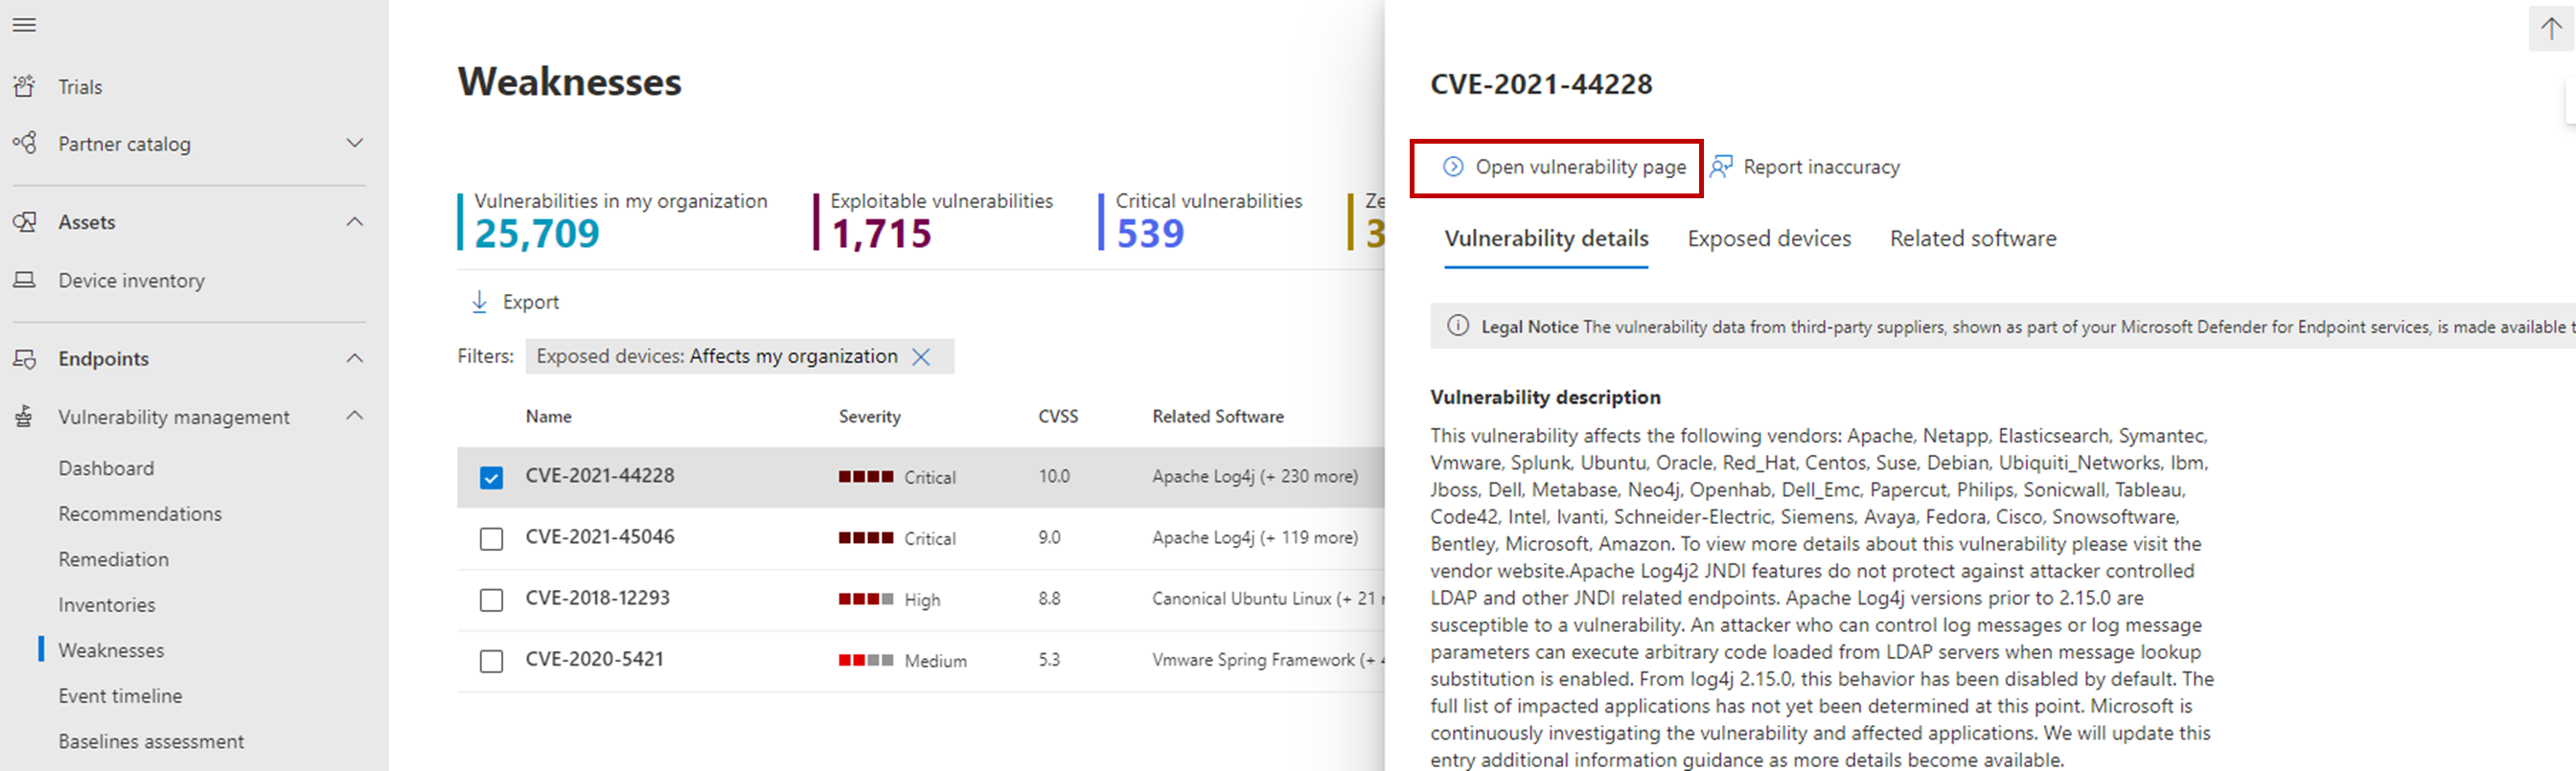 Снимок экрана: страница уязвимостей на панели мониторинга управления уязвимостями.